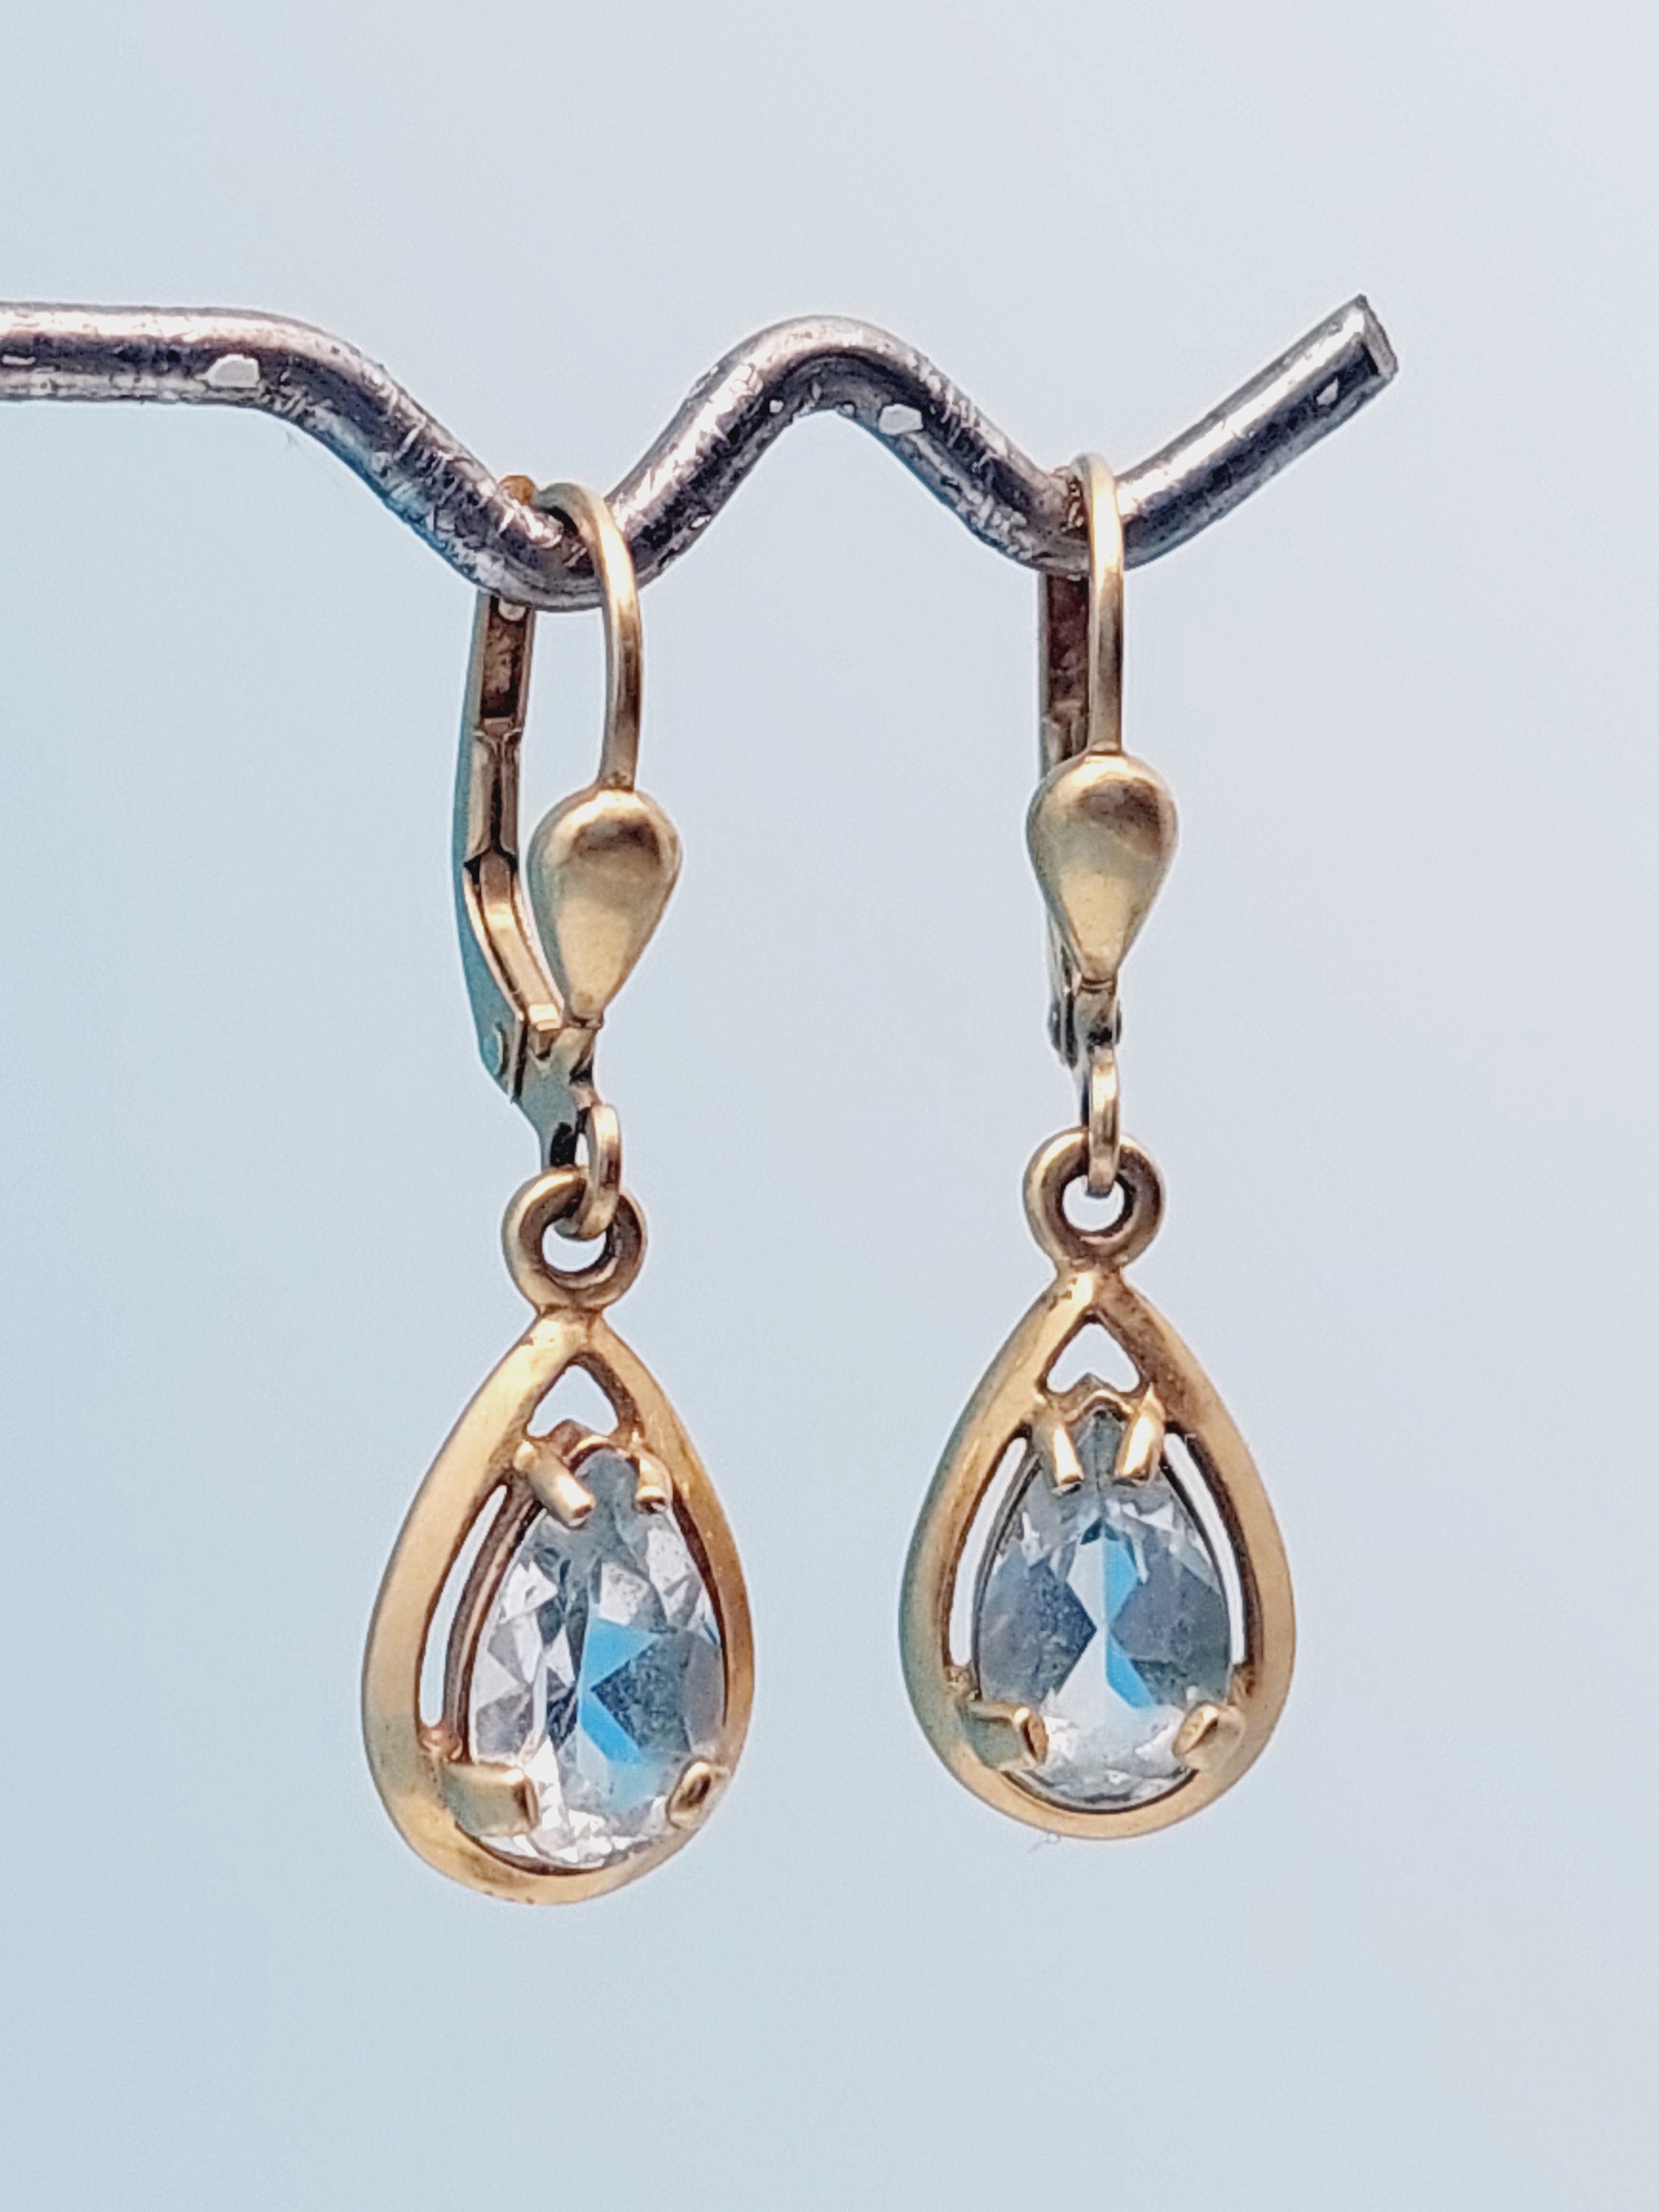 Edwardian Style Aquamarine Diamond Drop Earrings 3.2ct Aquas - Etsy